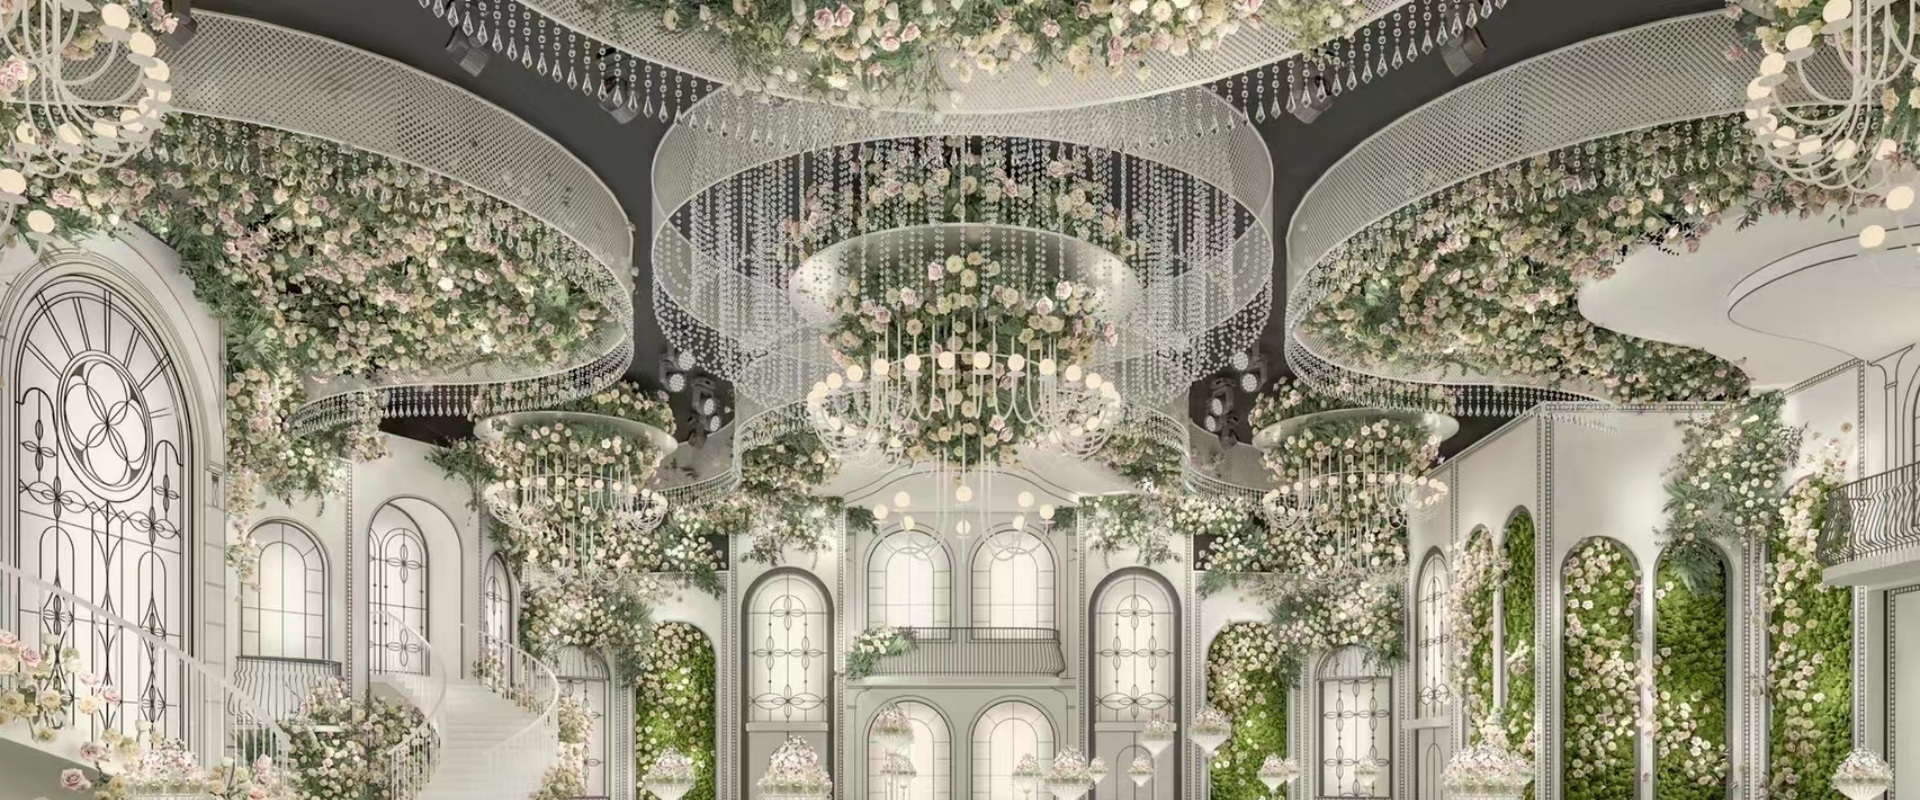 Dutti LED Unique Design Modern Chandelier Large Crystal Ceiling Pendant Lighting OEM ODM for Wedding Ballroom South Africa